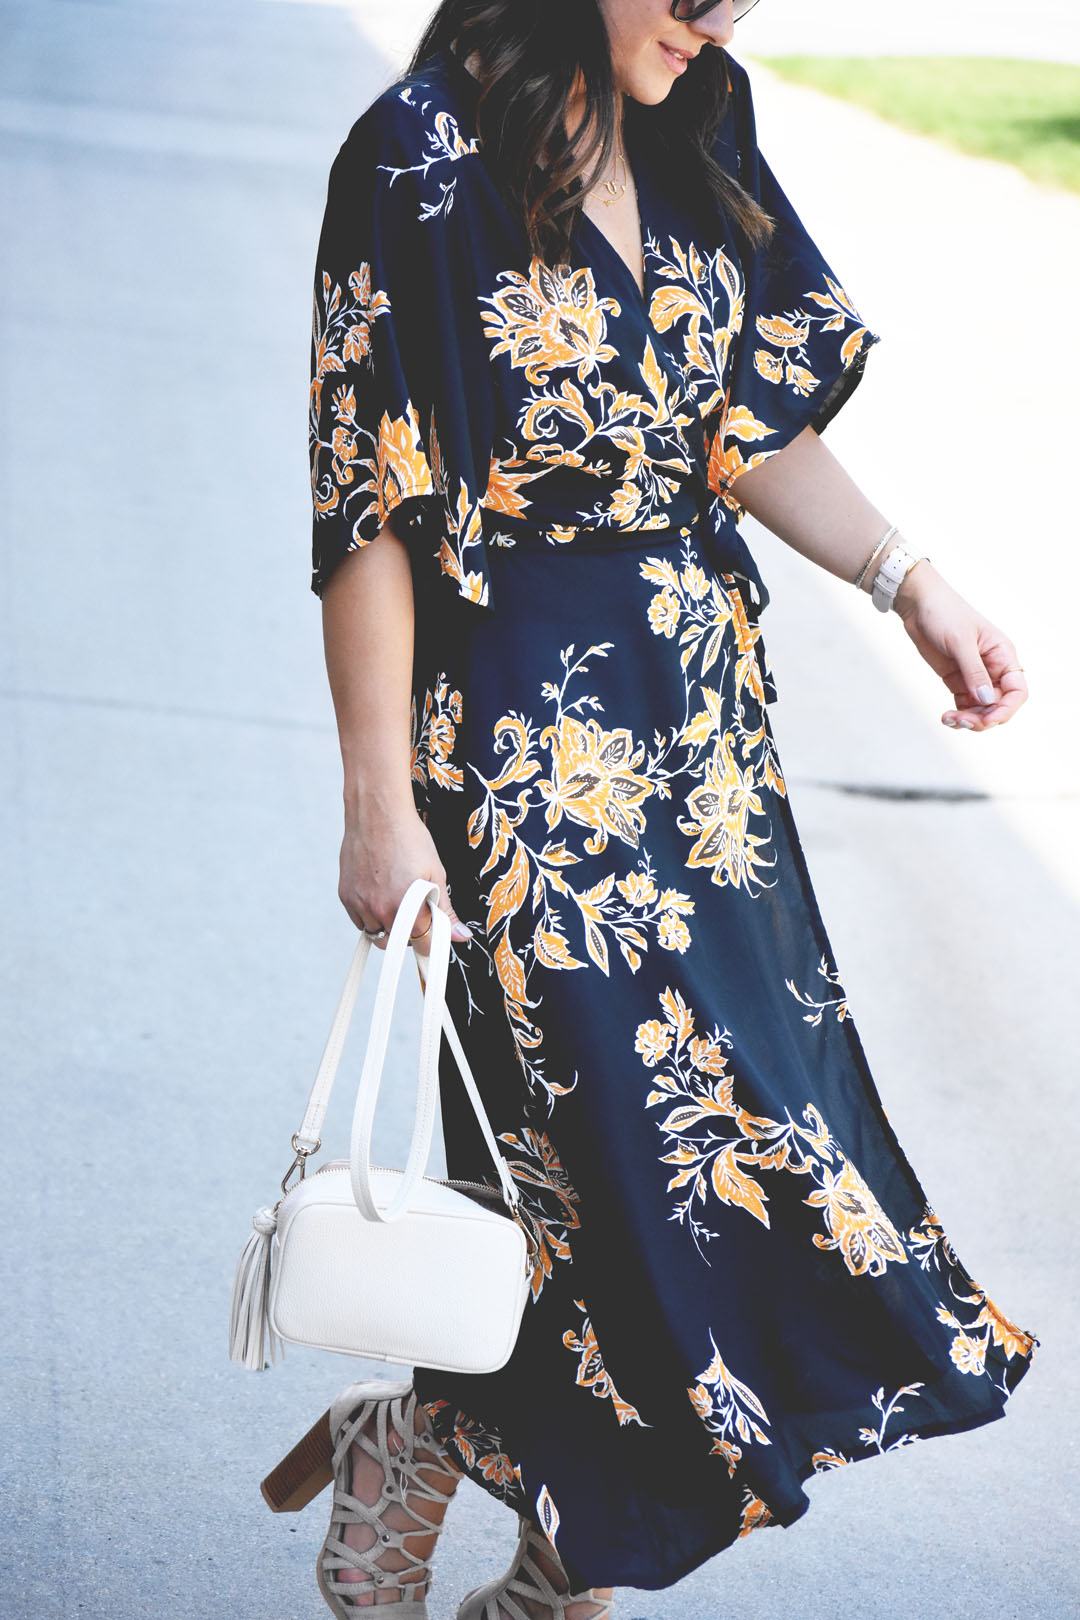 Carolina Hellal wearing a floral maxi dress and h&m beige crossbody bag.